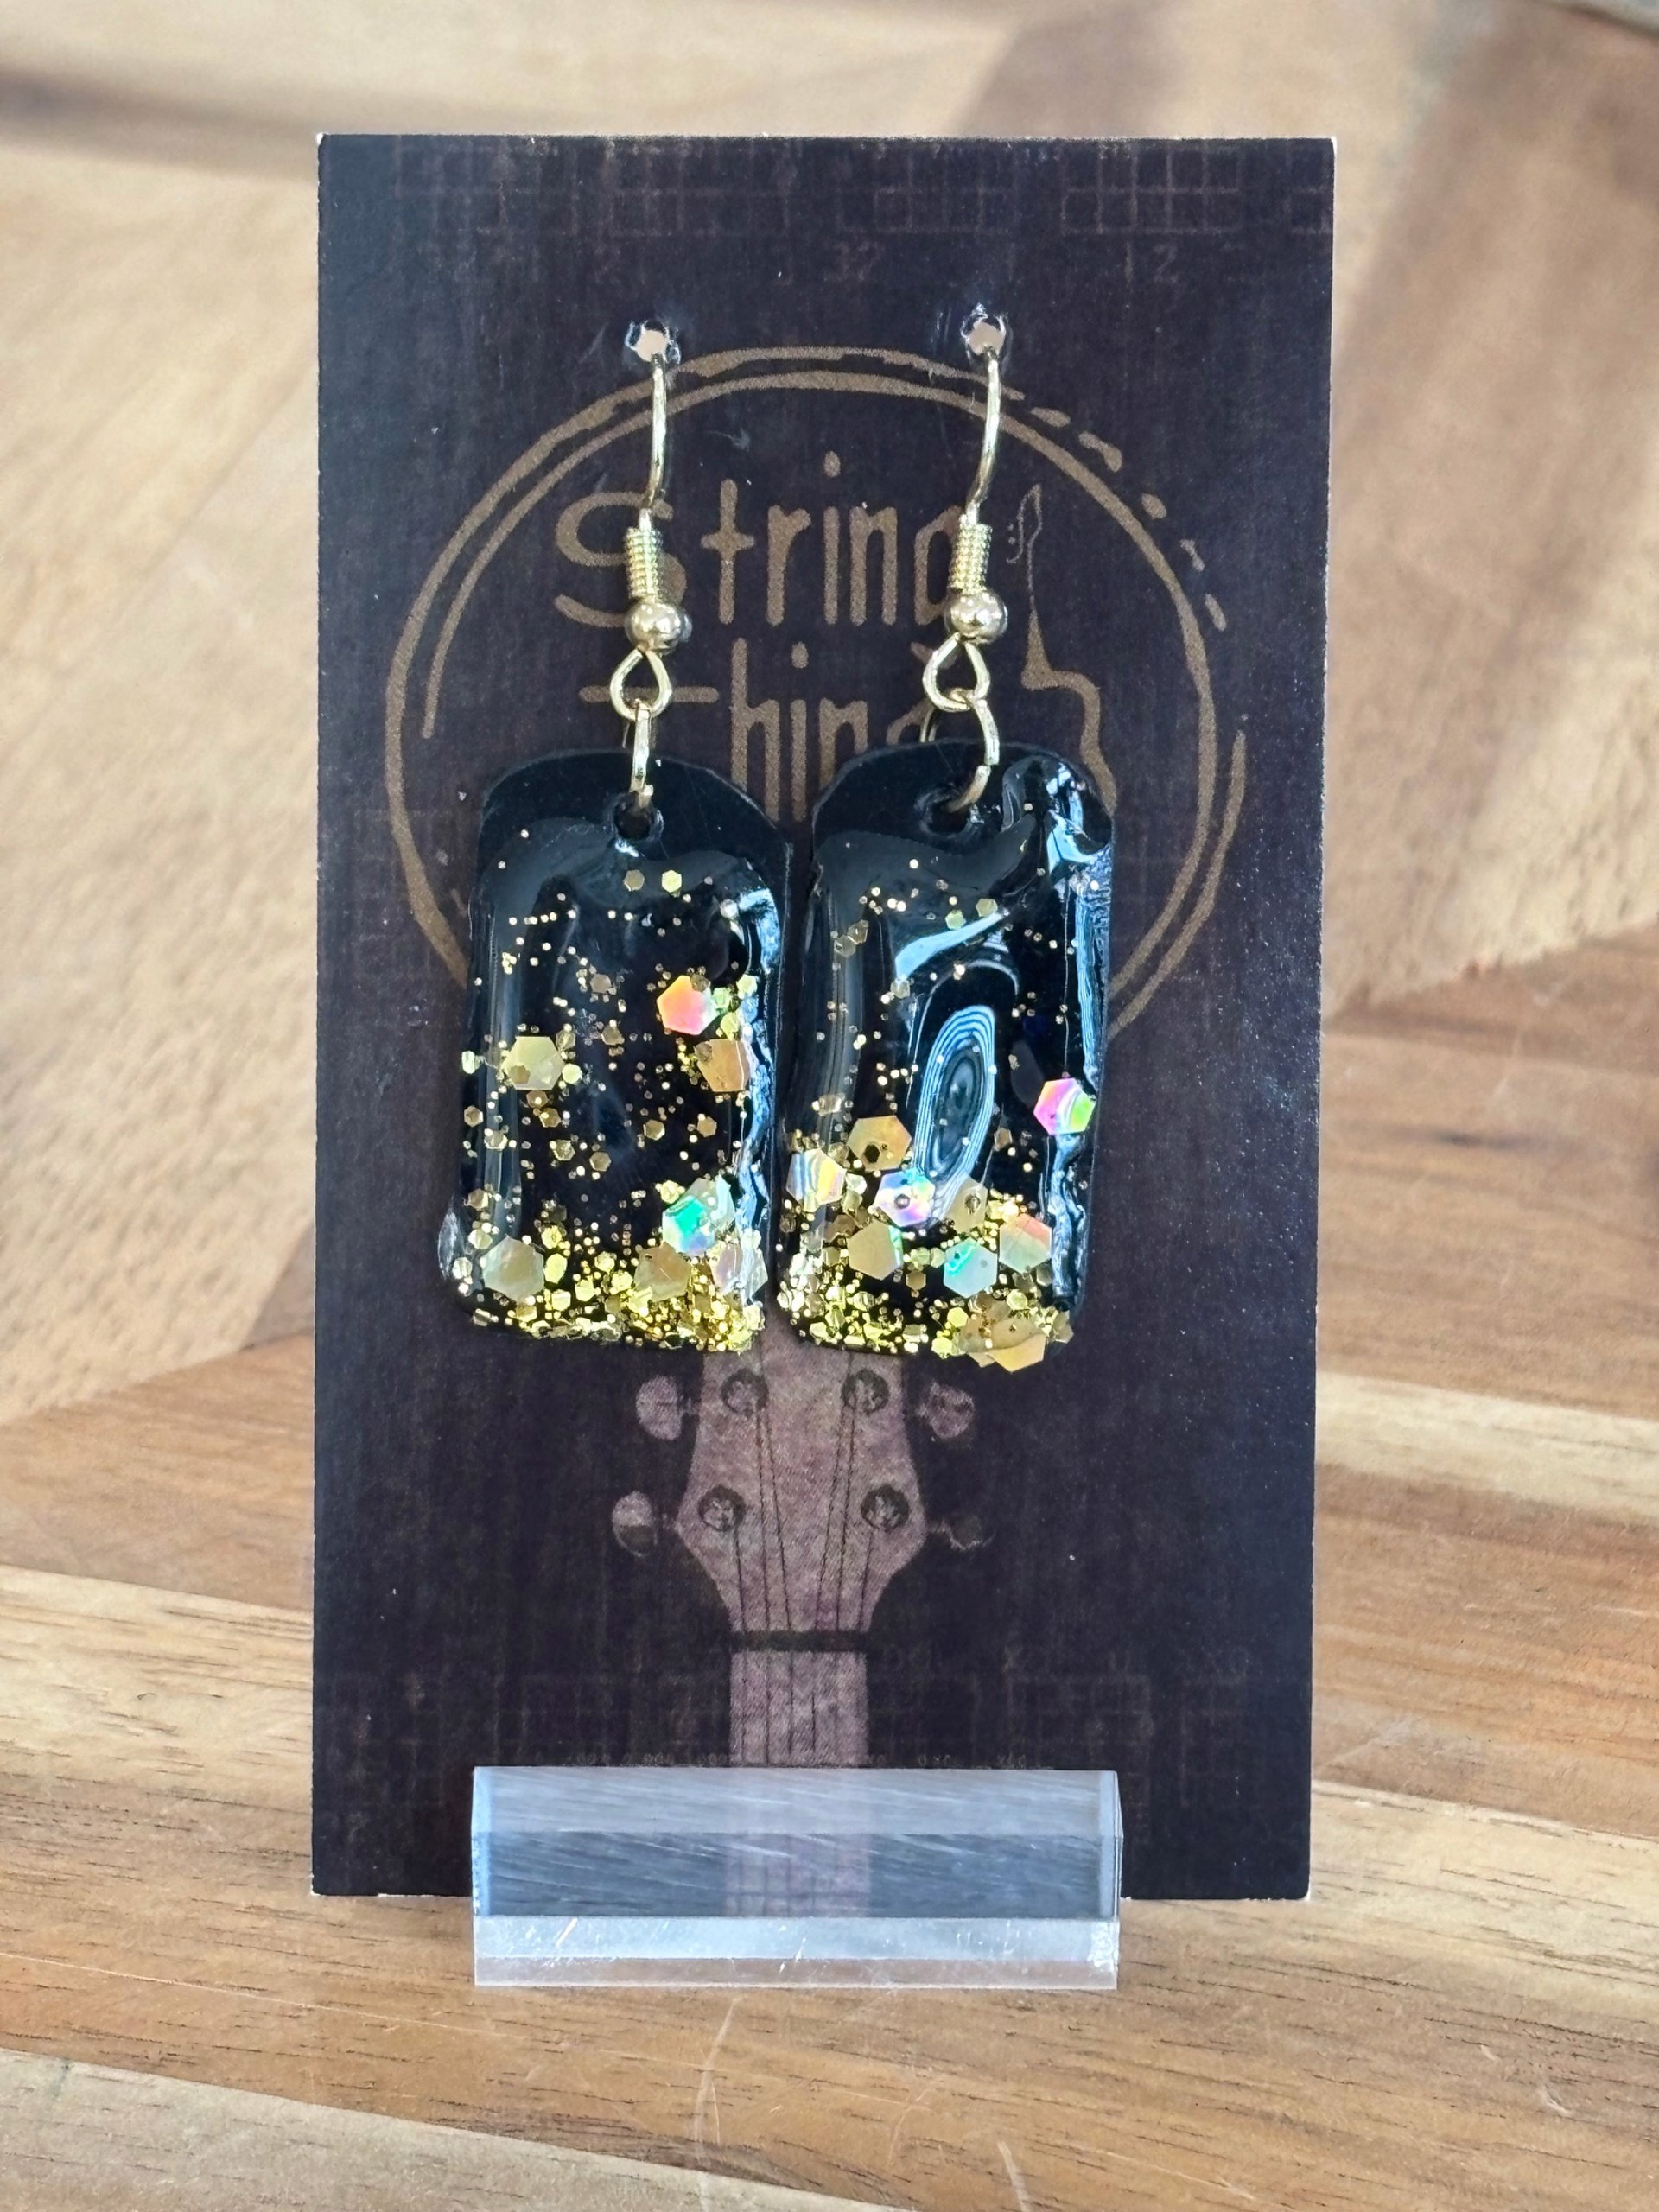 Black Gold Vinyl Earrings by String Thing Designs